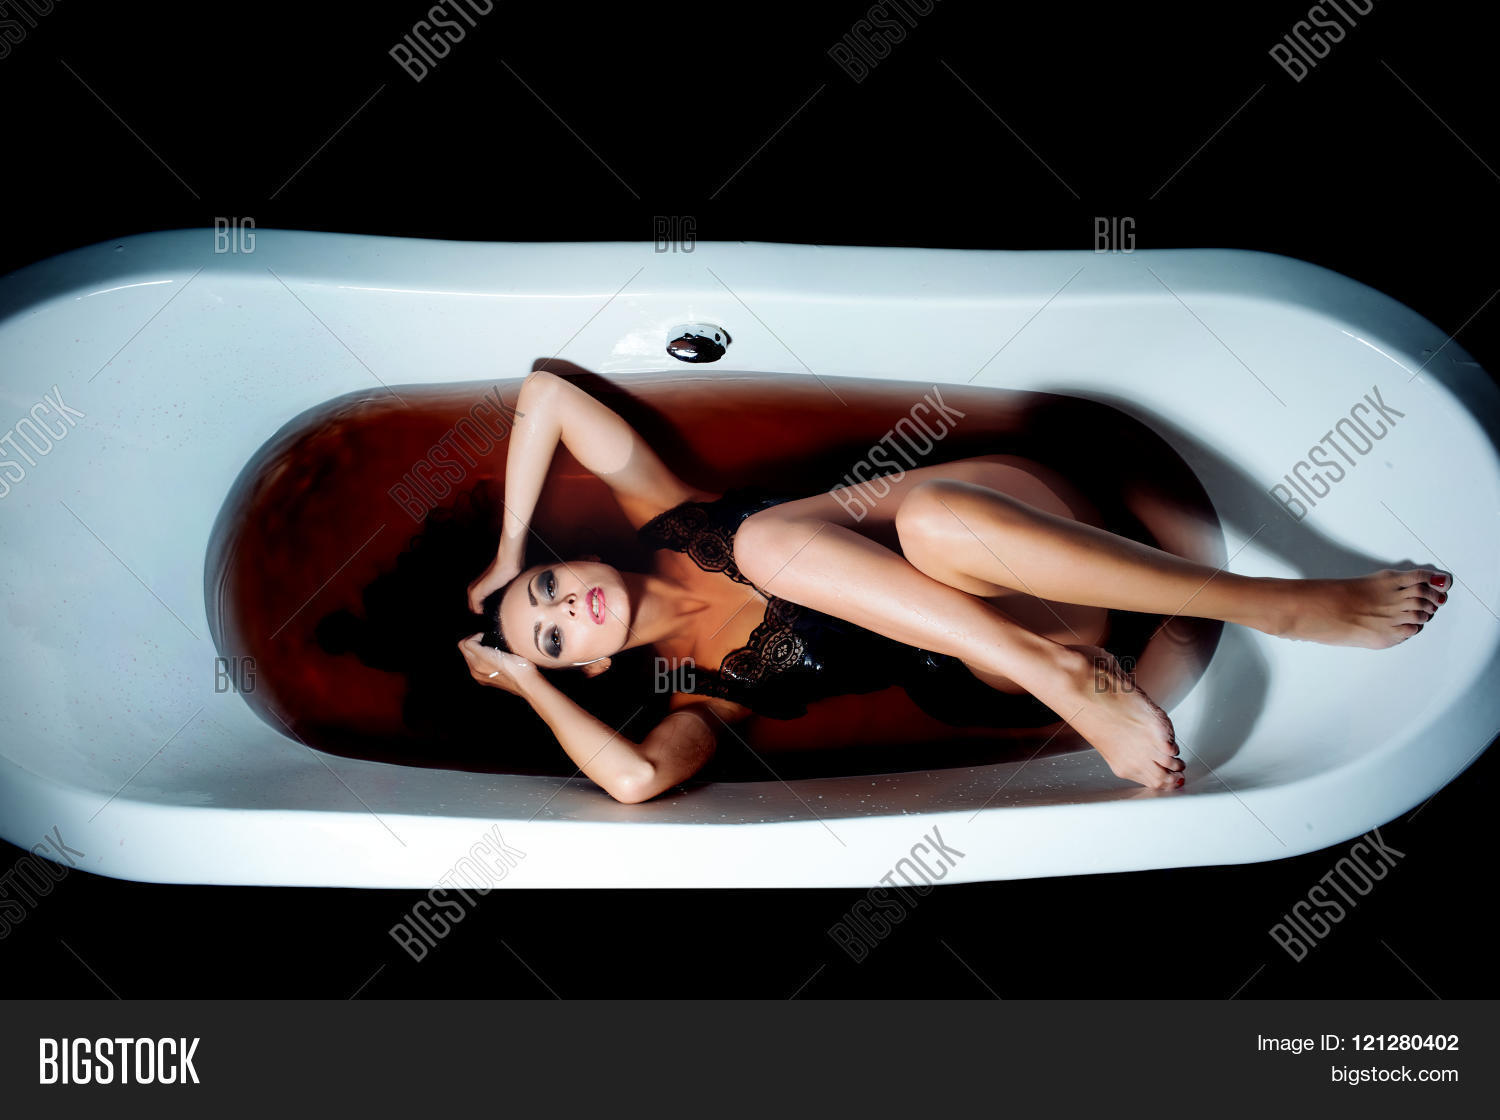 david pulaski reccomend hot women in bathtub pic